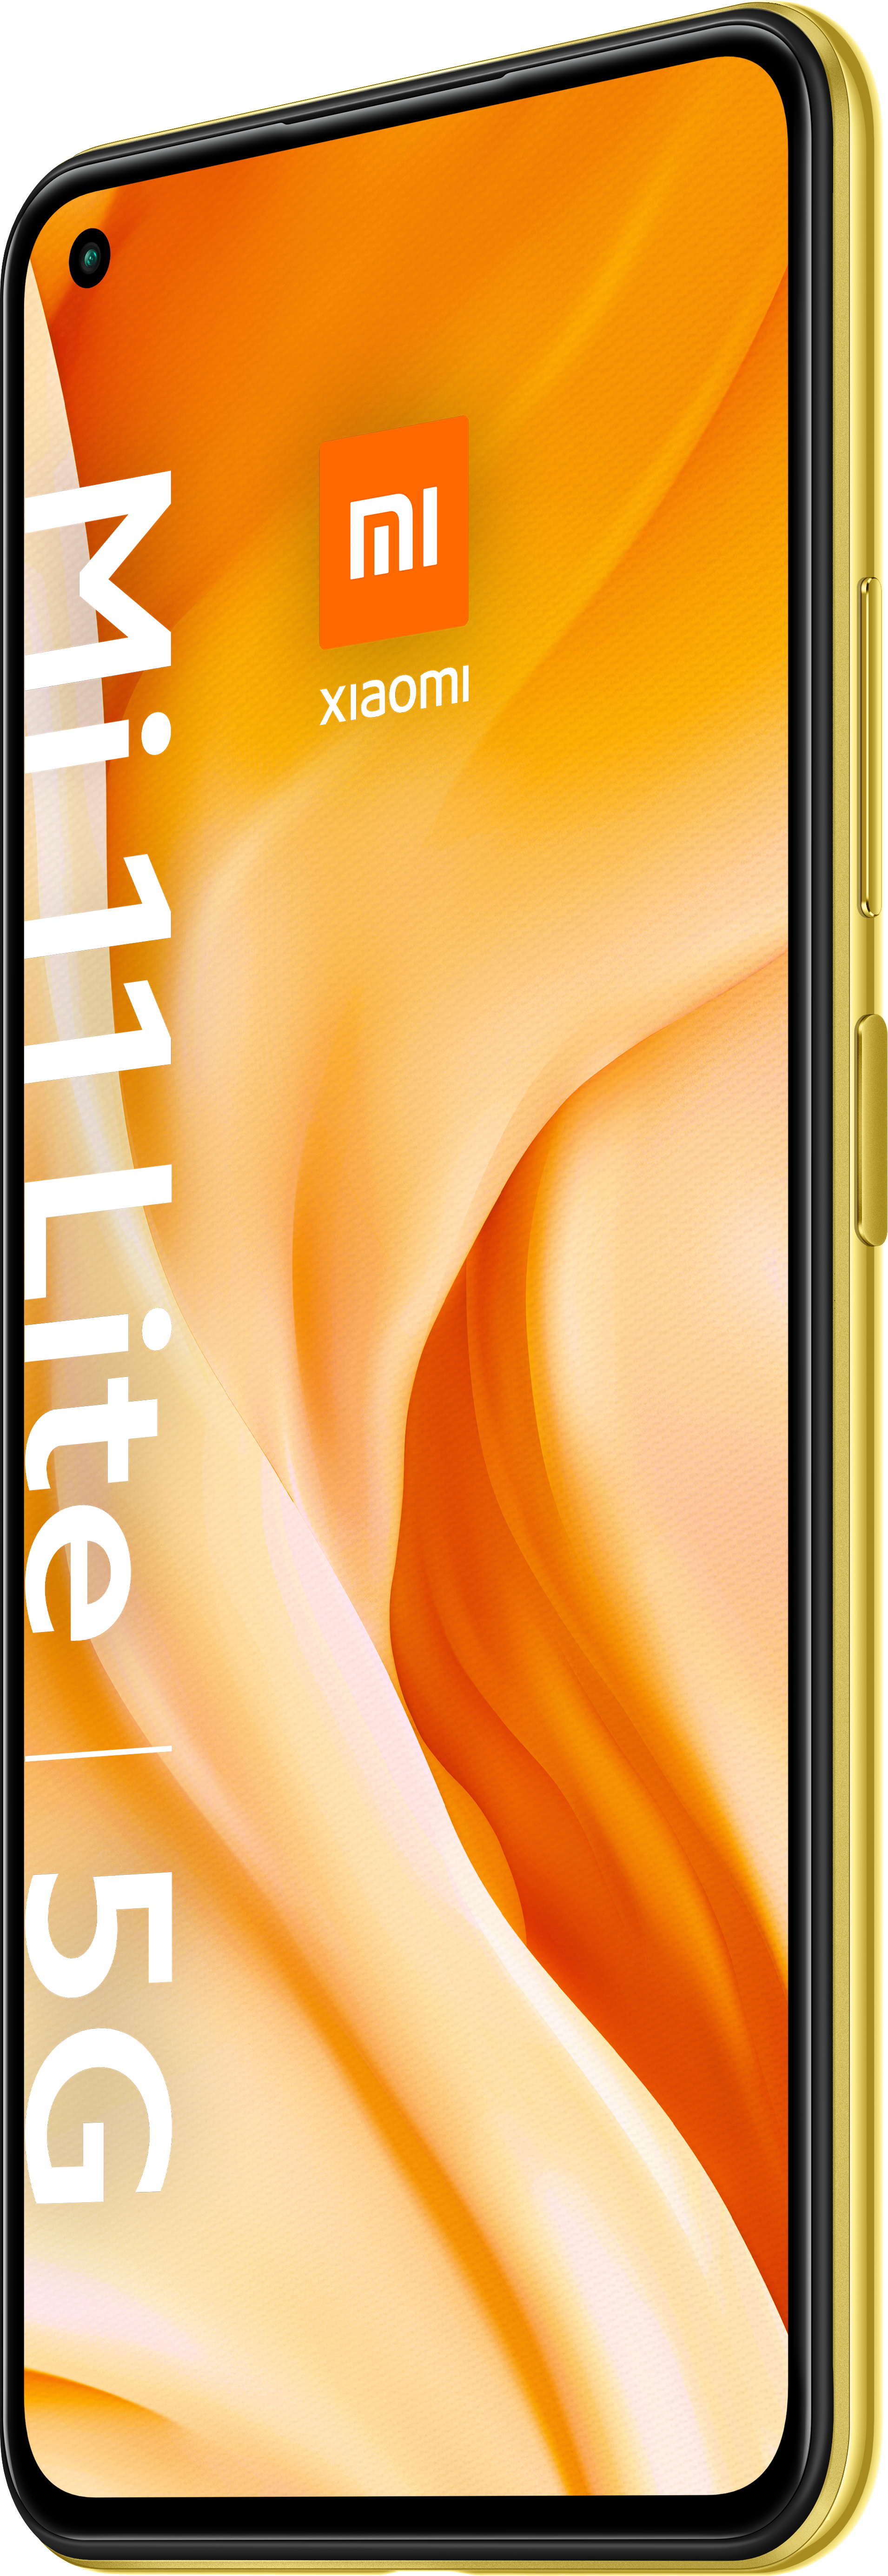 XIAOMI Mi SIM LITE Yellow Dual 11 5G Citrus GB 128